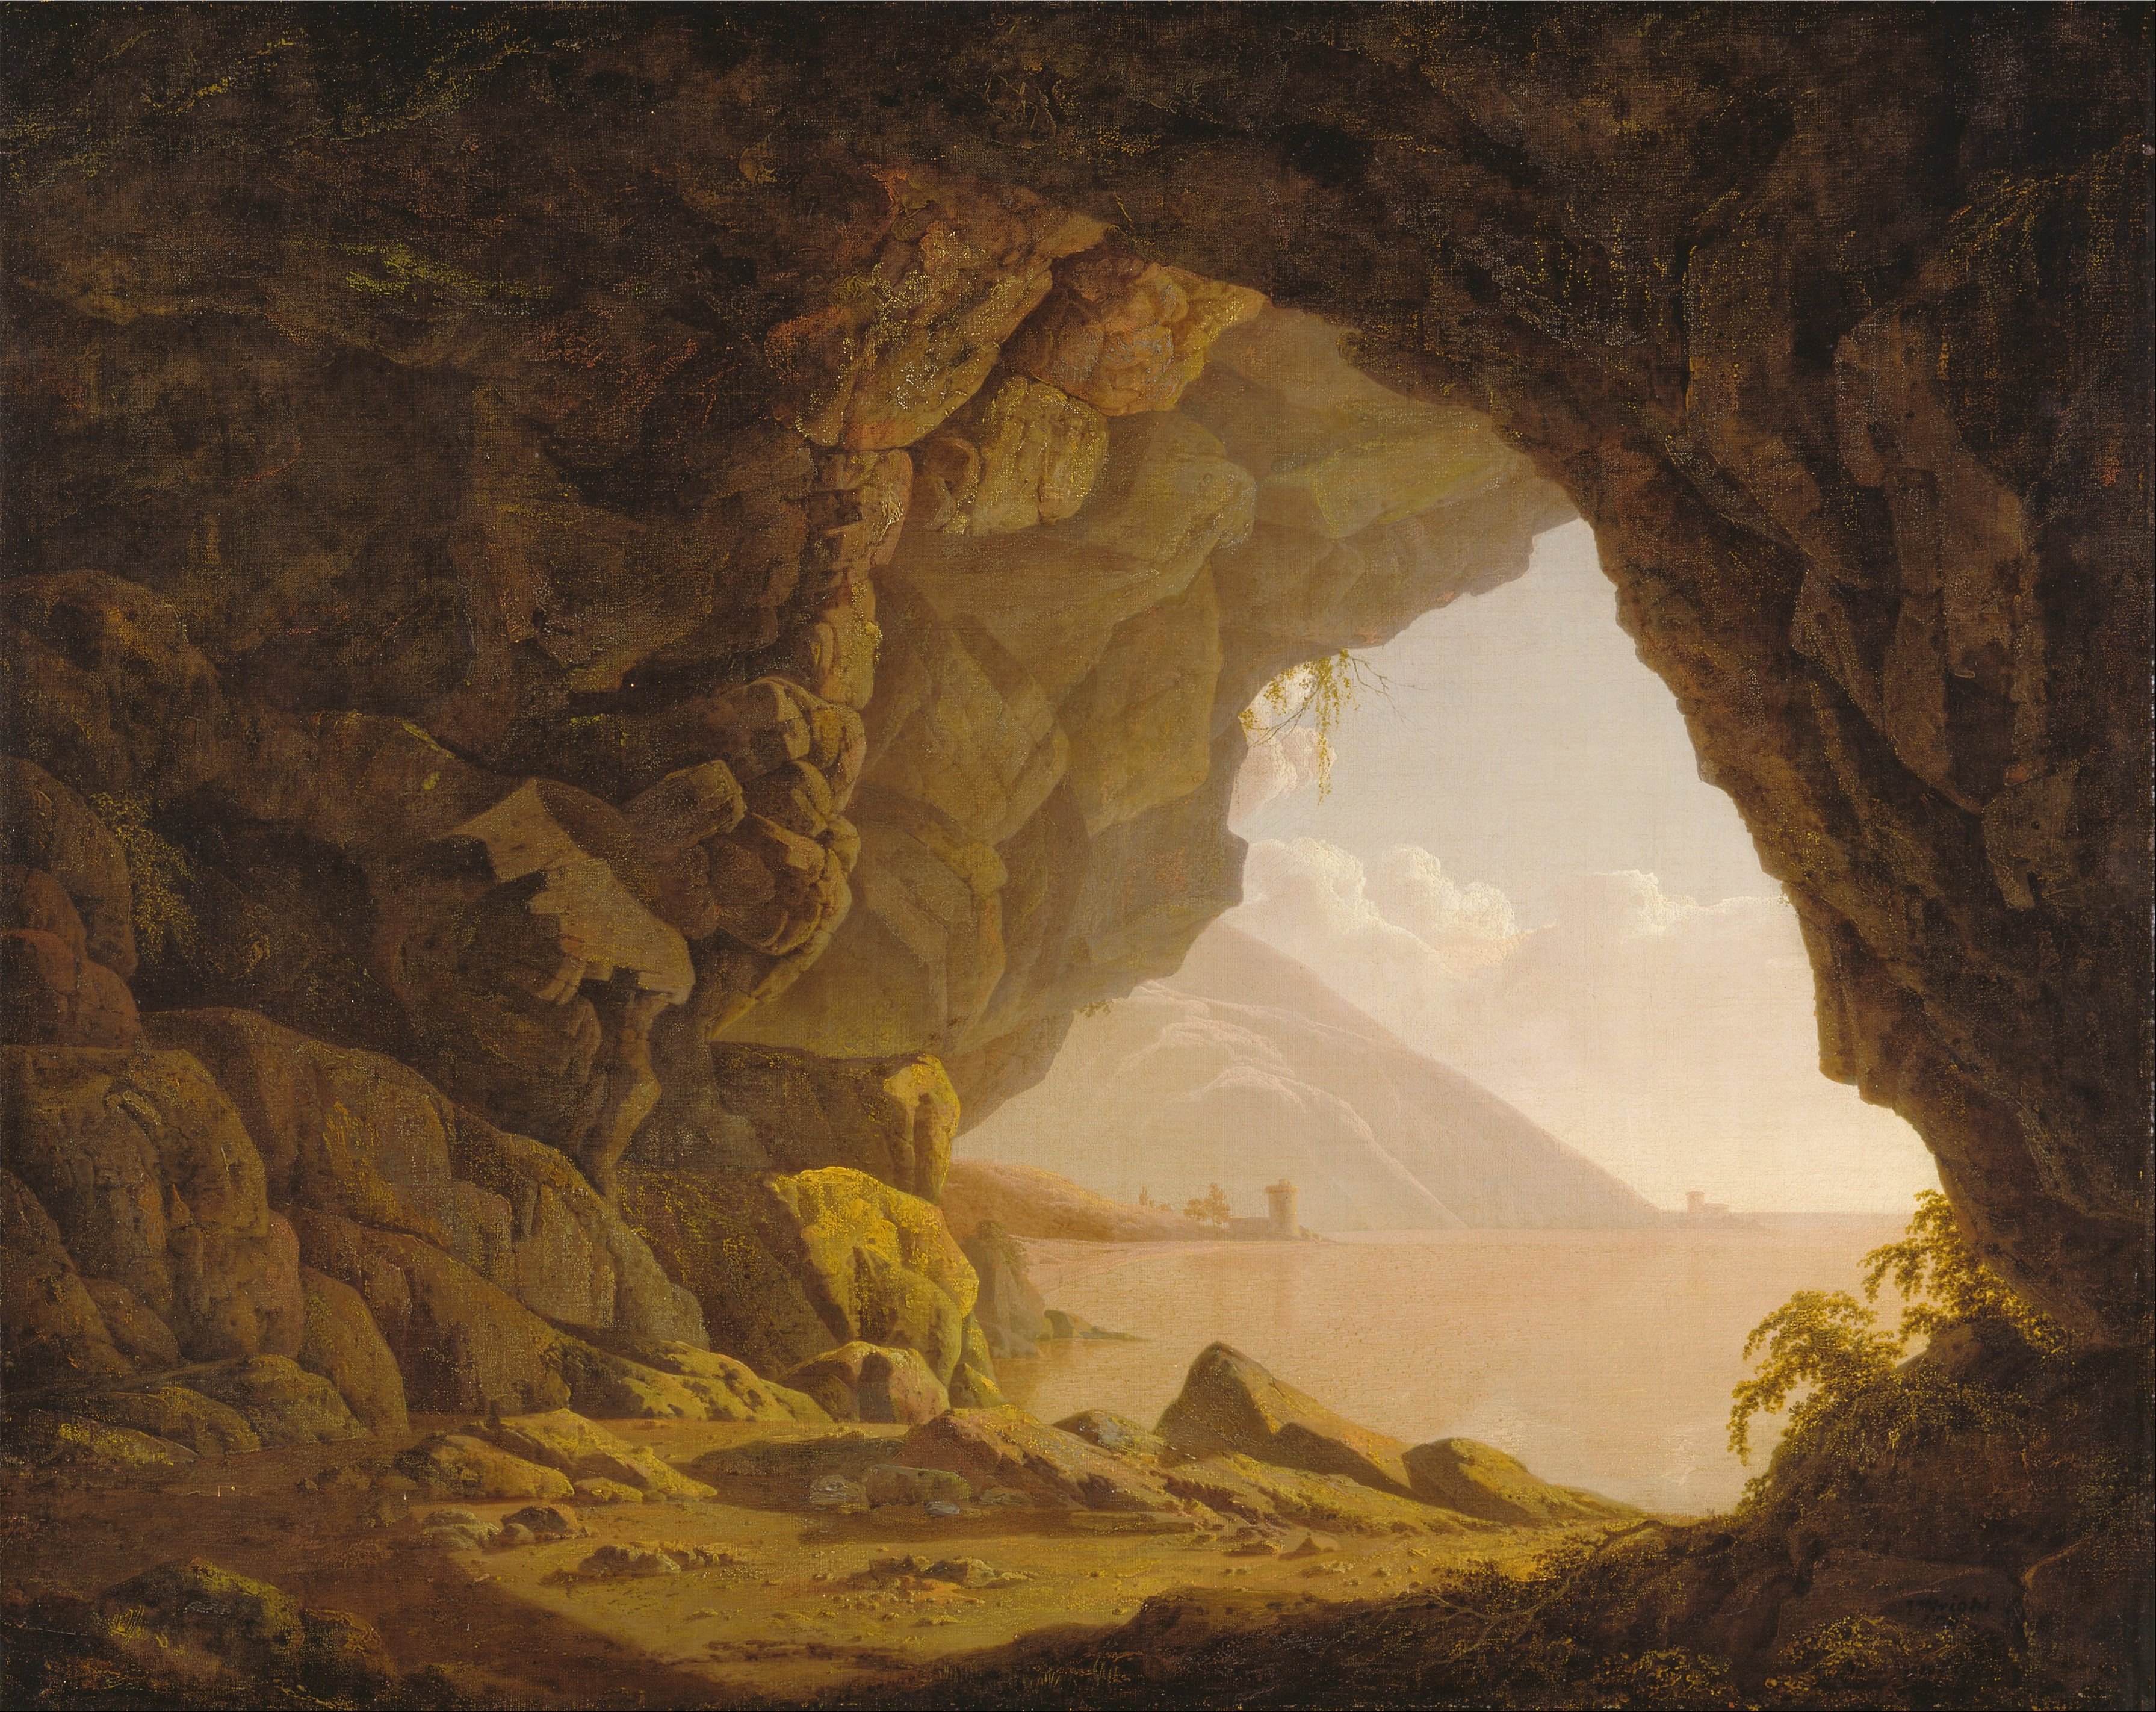 Joseph Wright of Derby - Cavern, near Naples - Google Art Project